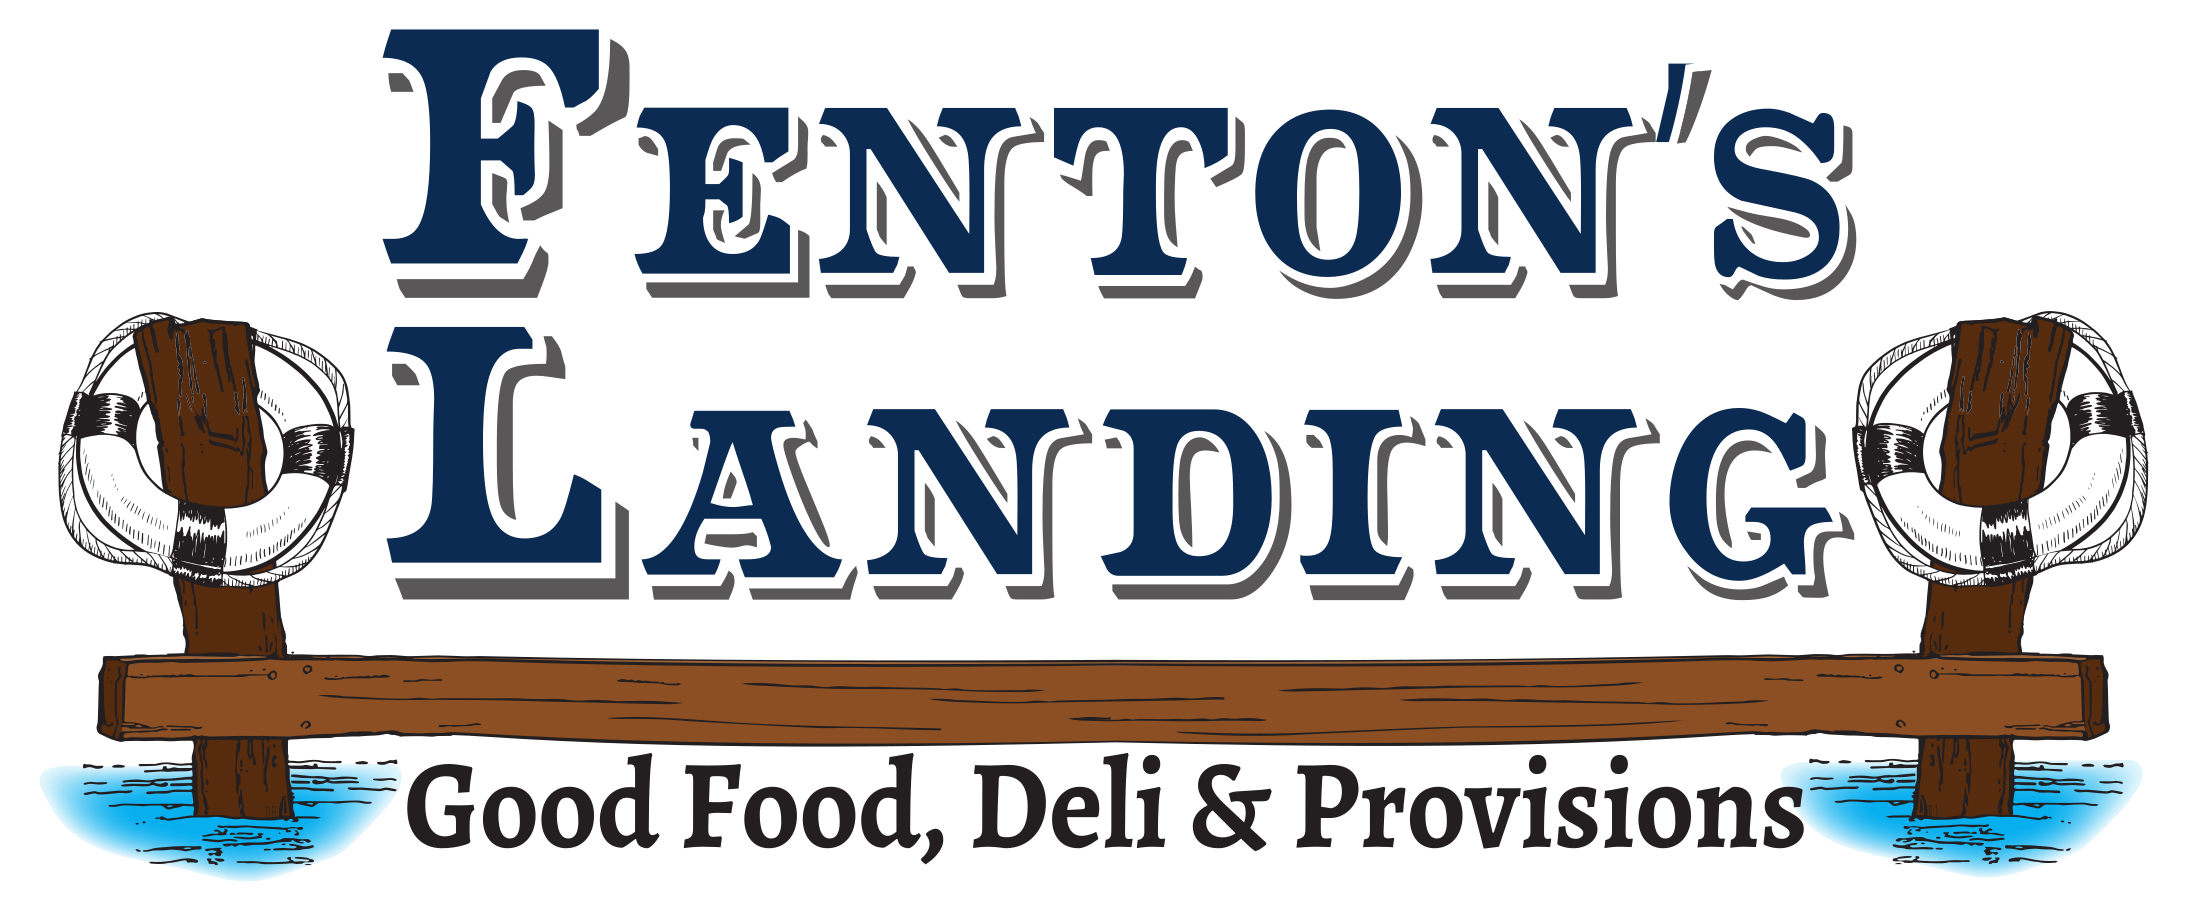 Fenton's Landing logo